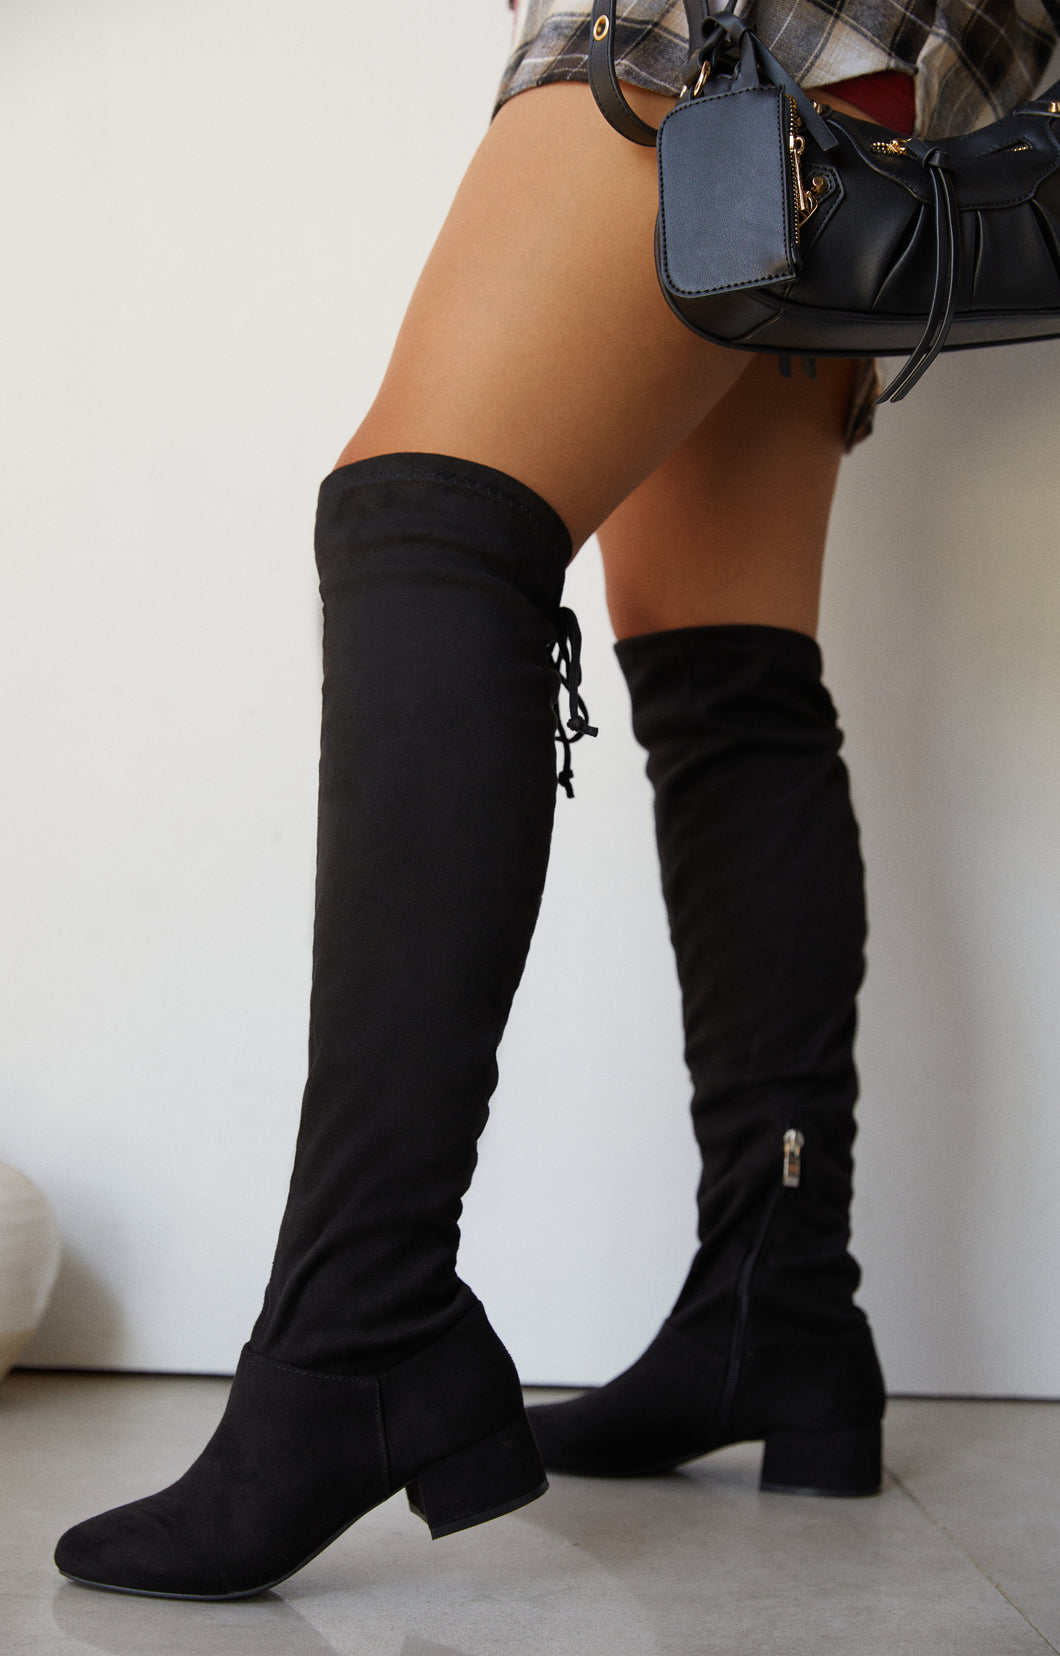 Model Wearing Black Knee High Boots